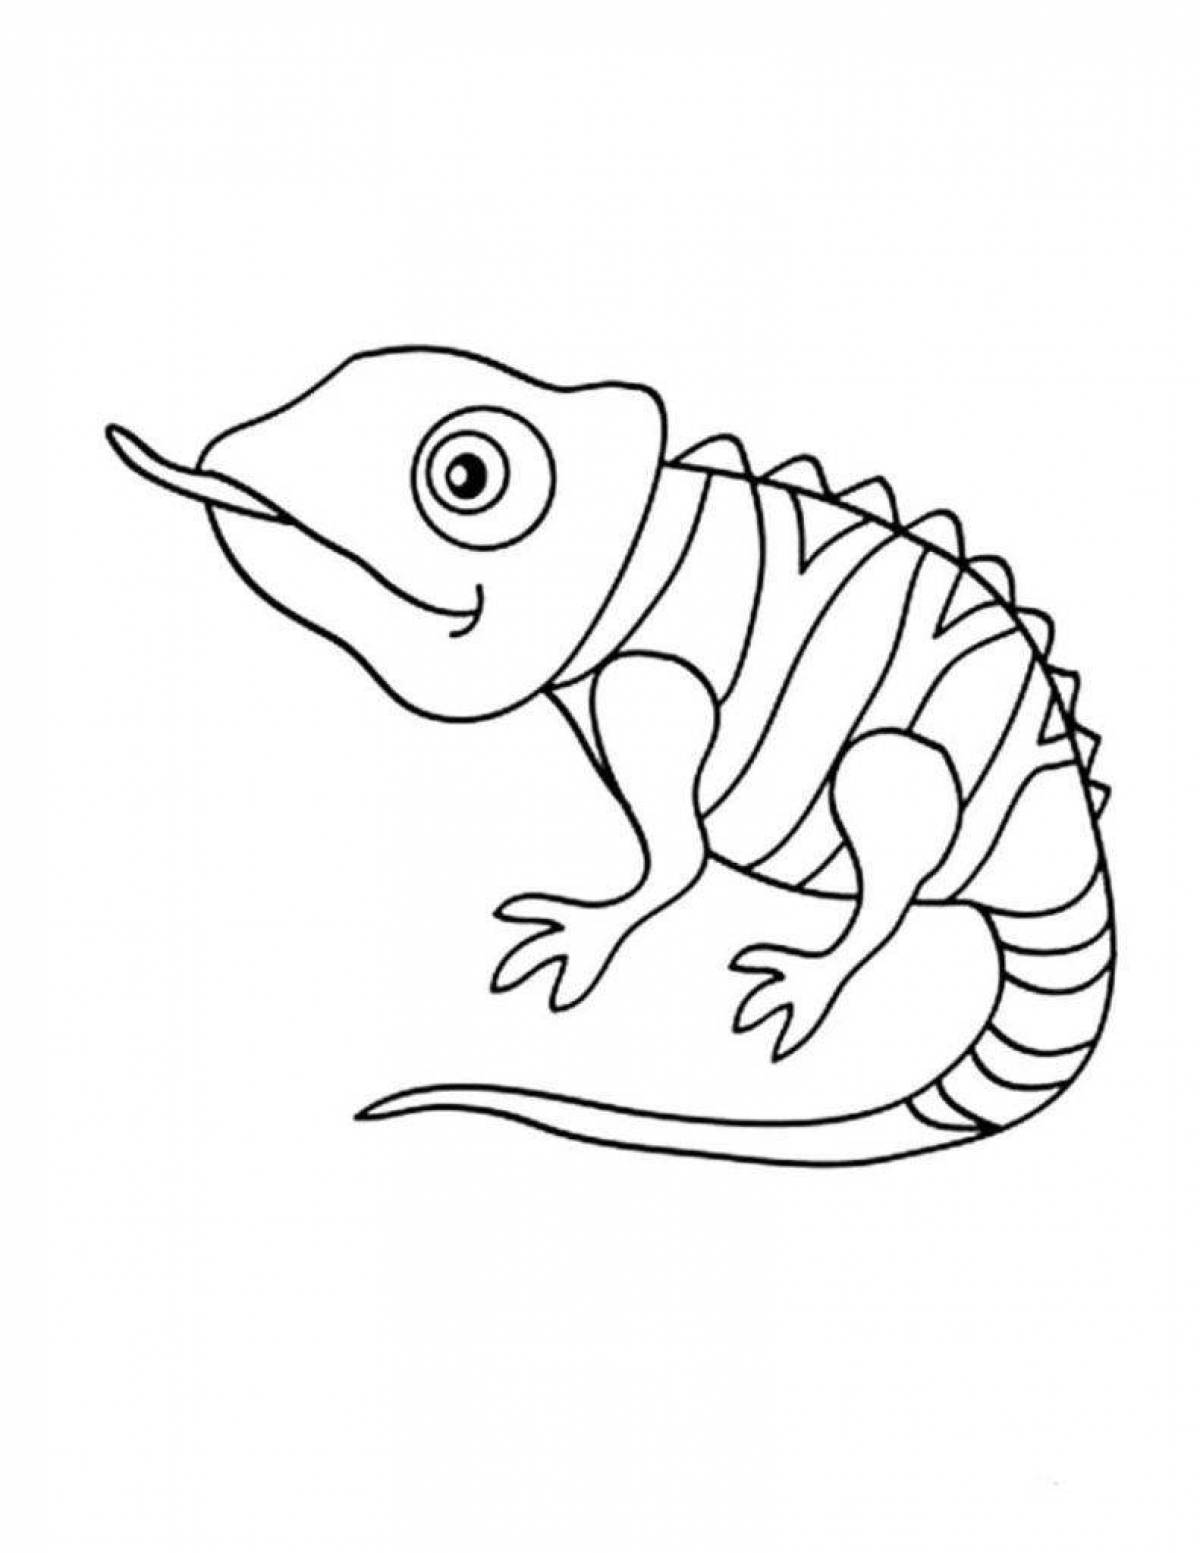 Chameleon humorous coloring book